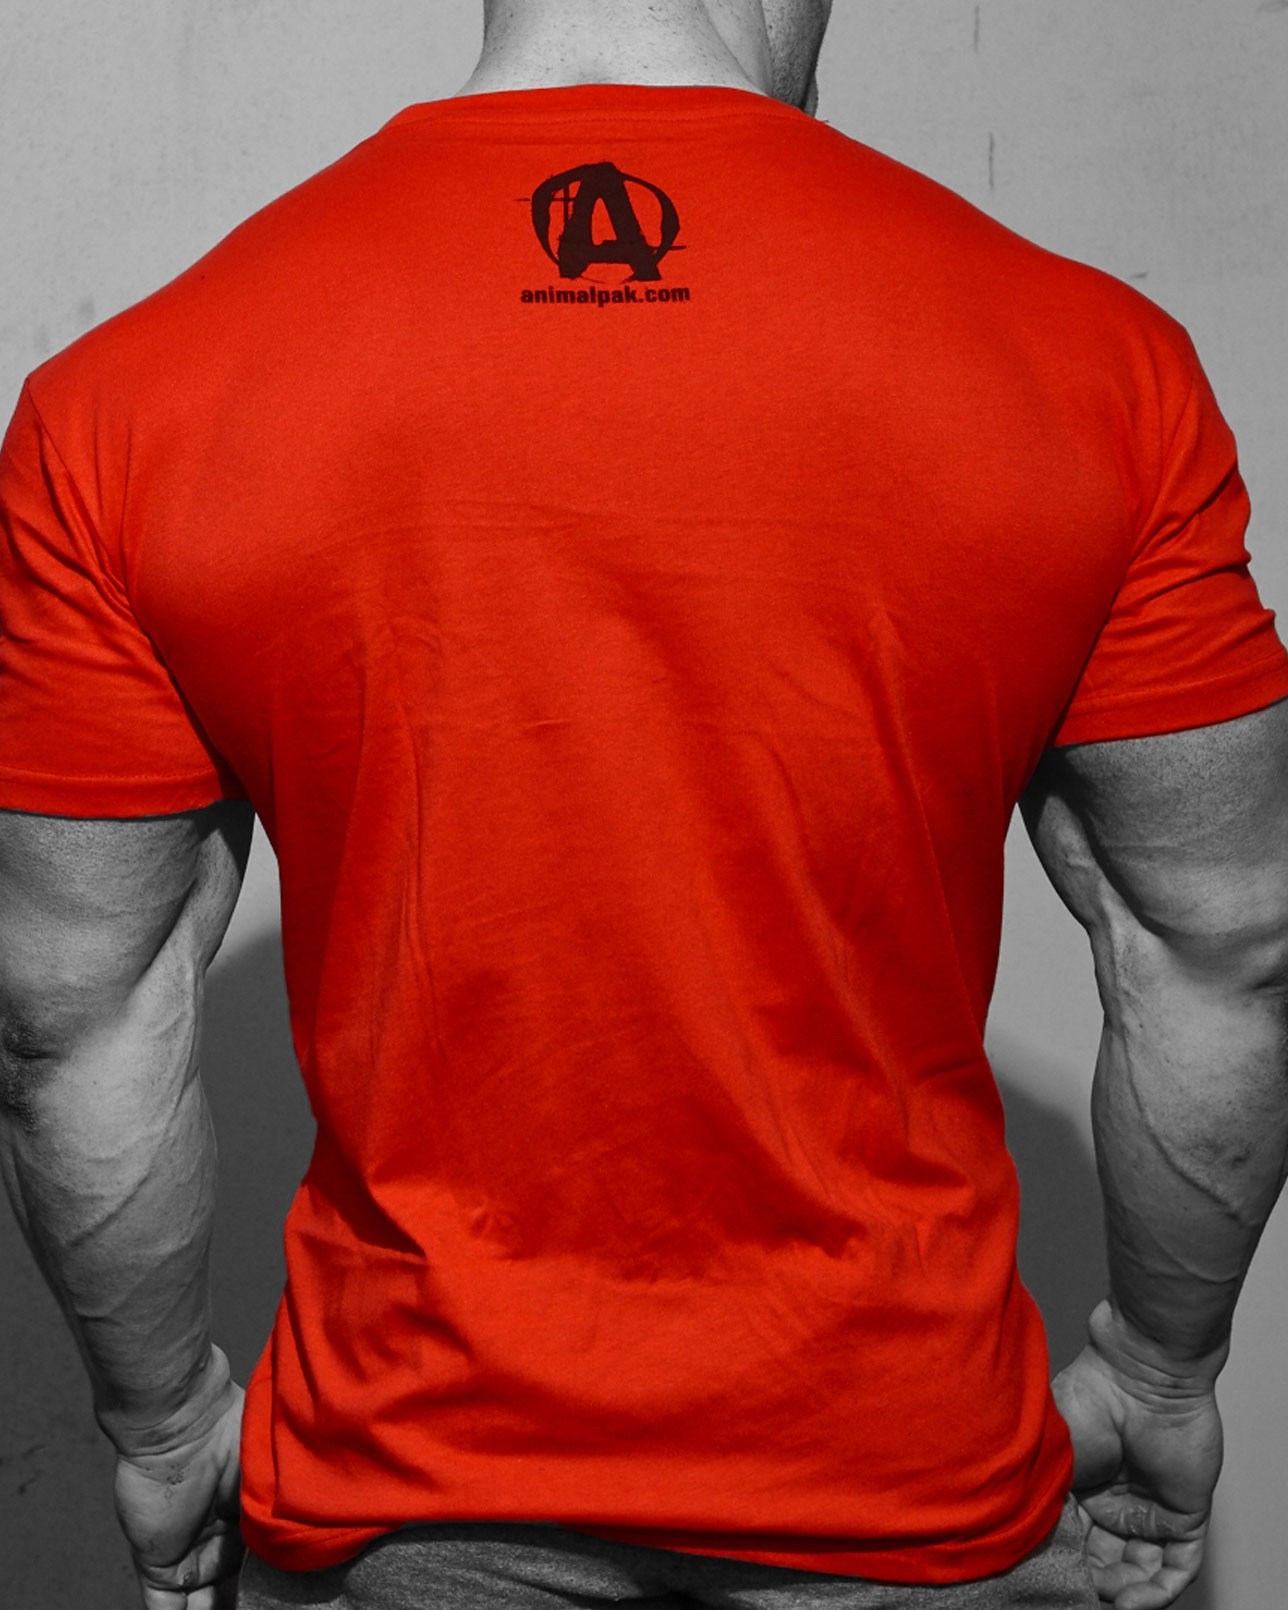 Animal Iconic T-Shirt Red 